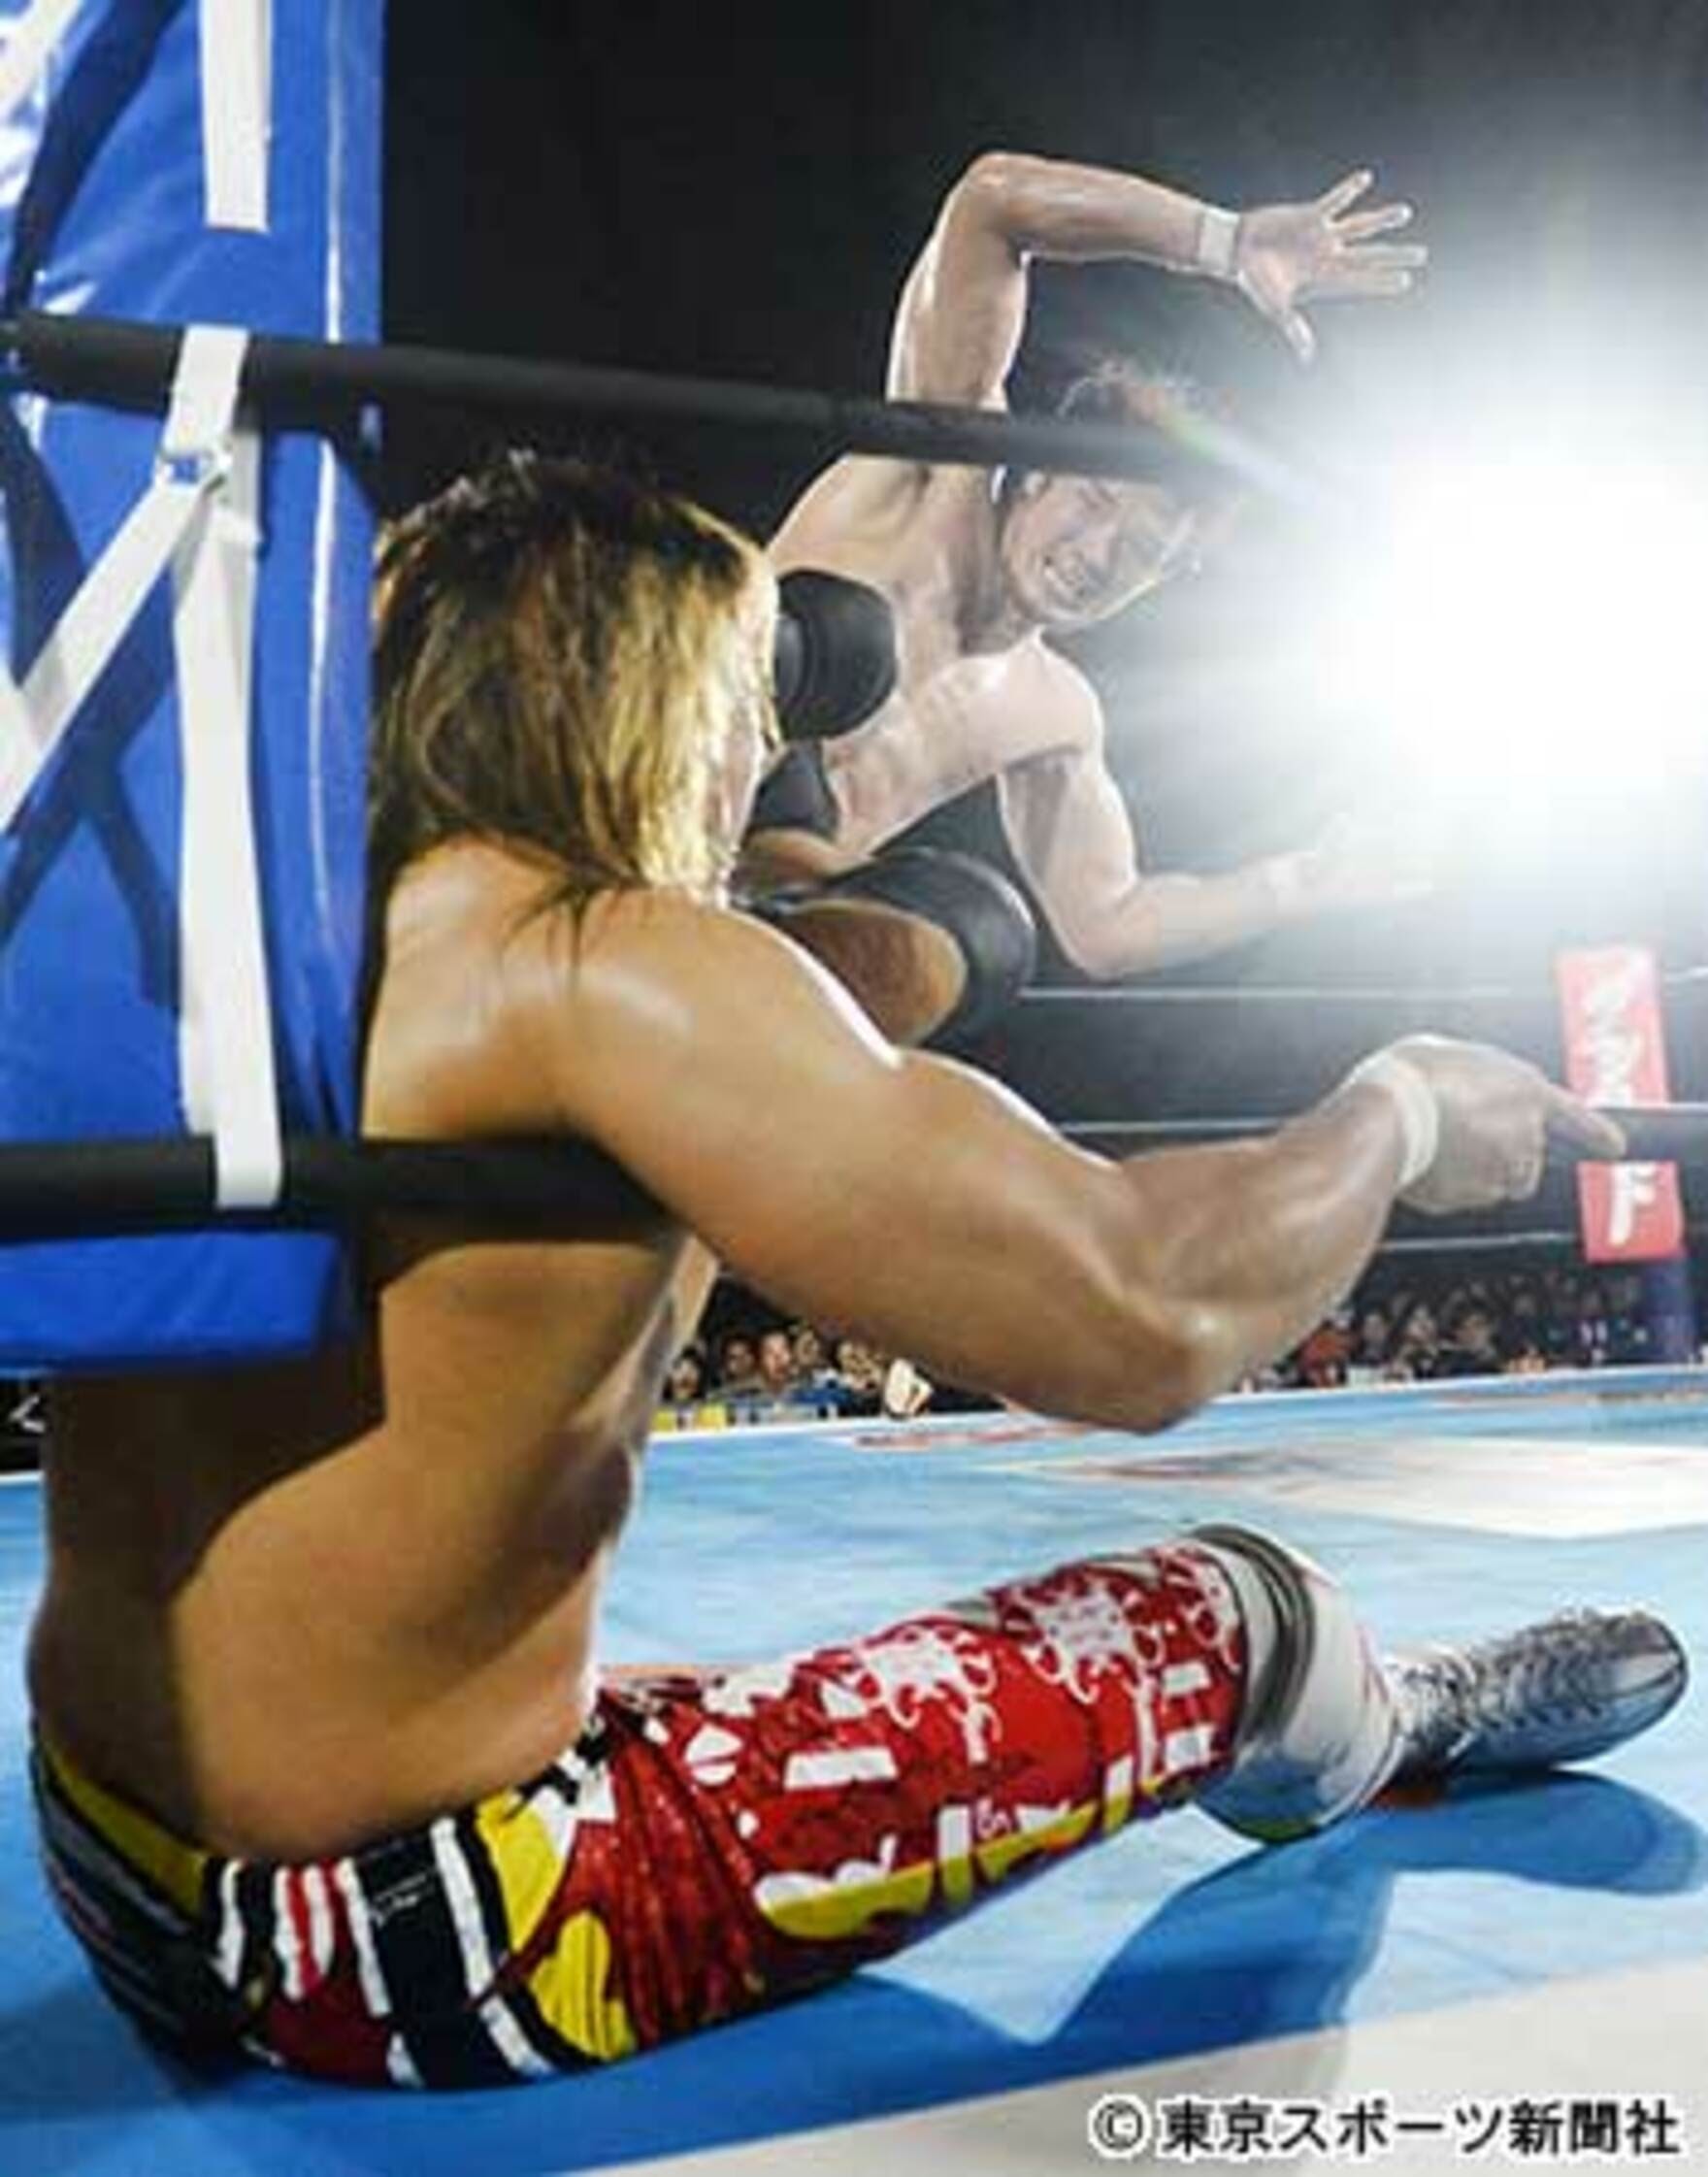 Image of Shibata dropkicking Tanahashi in the corner of the ring. 